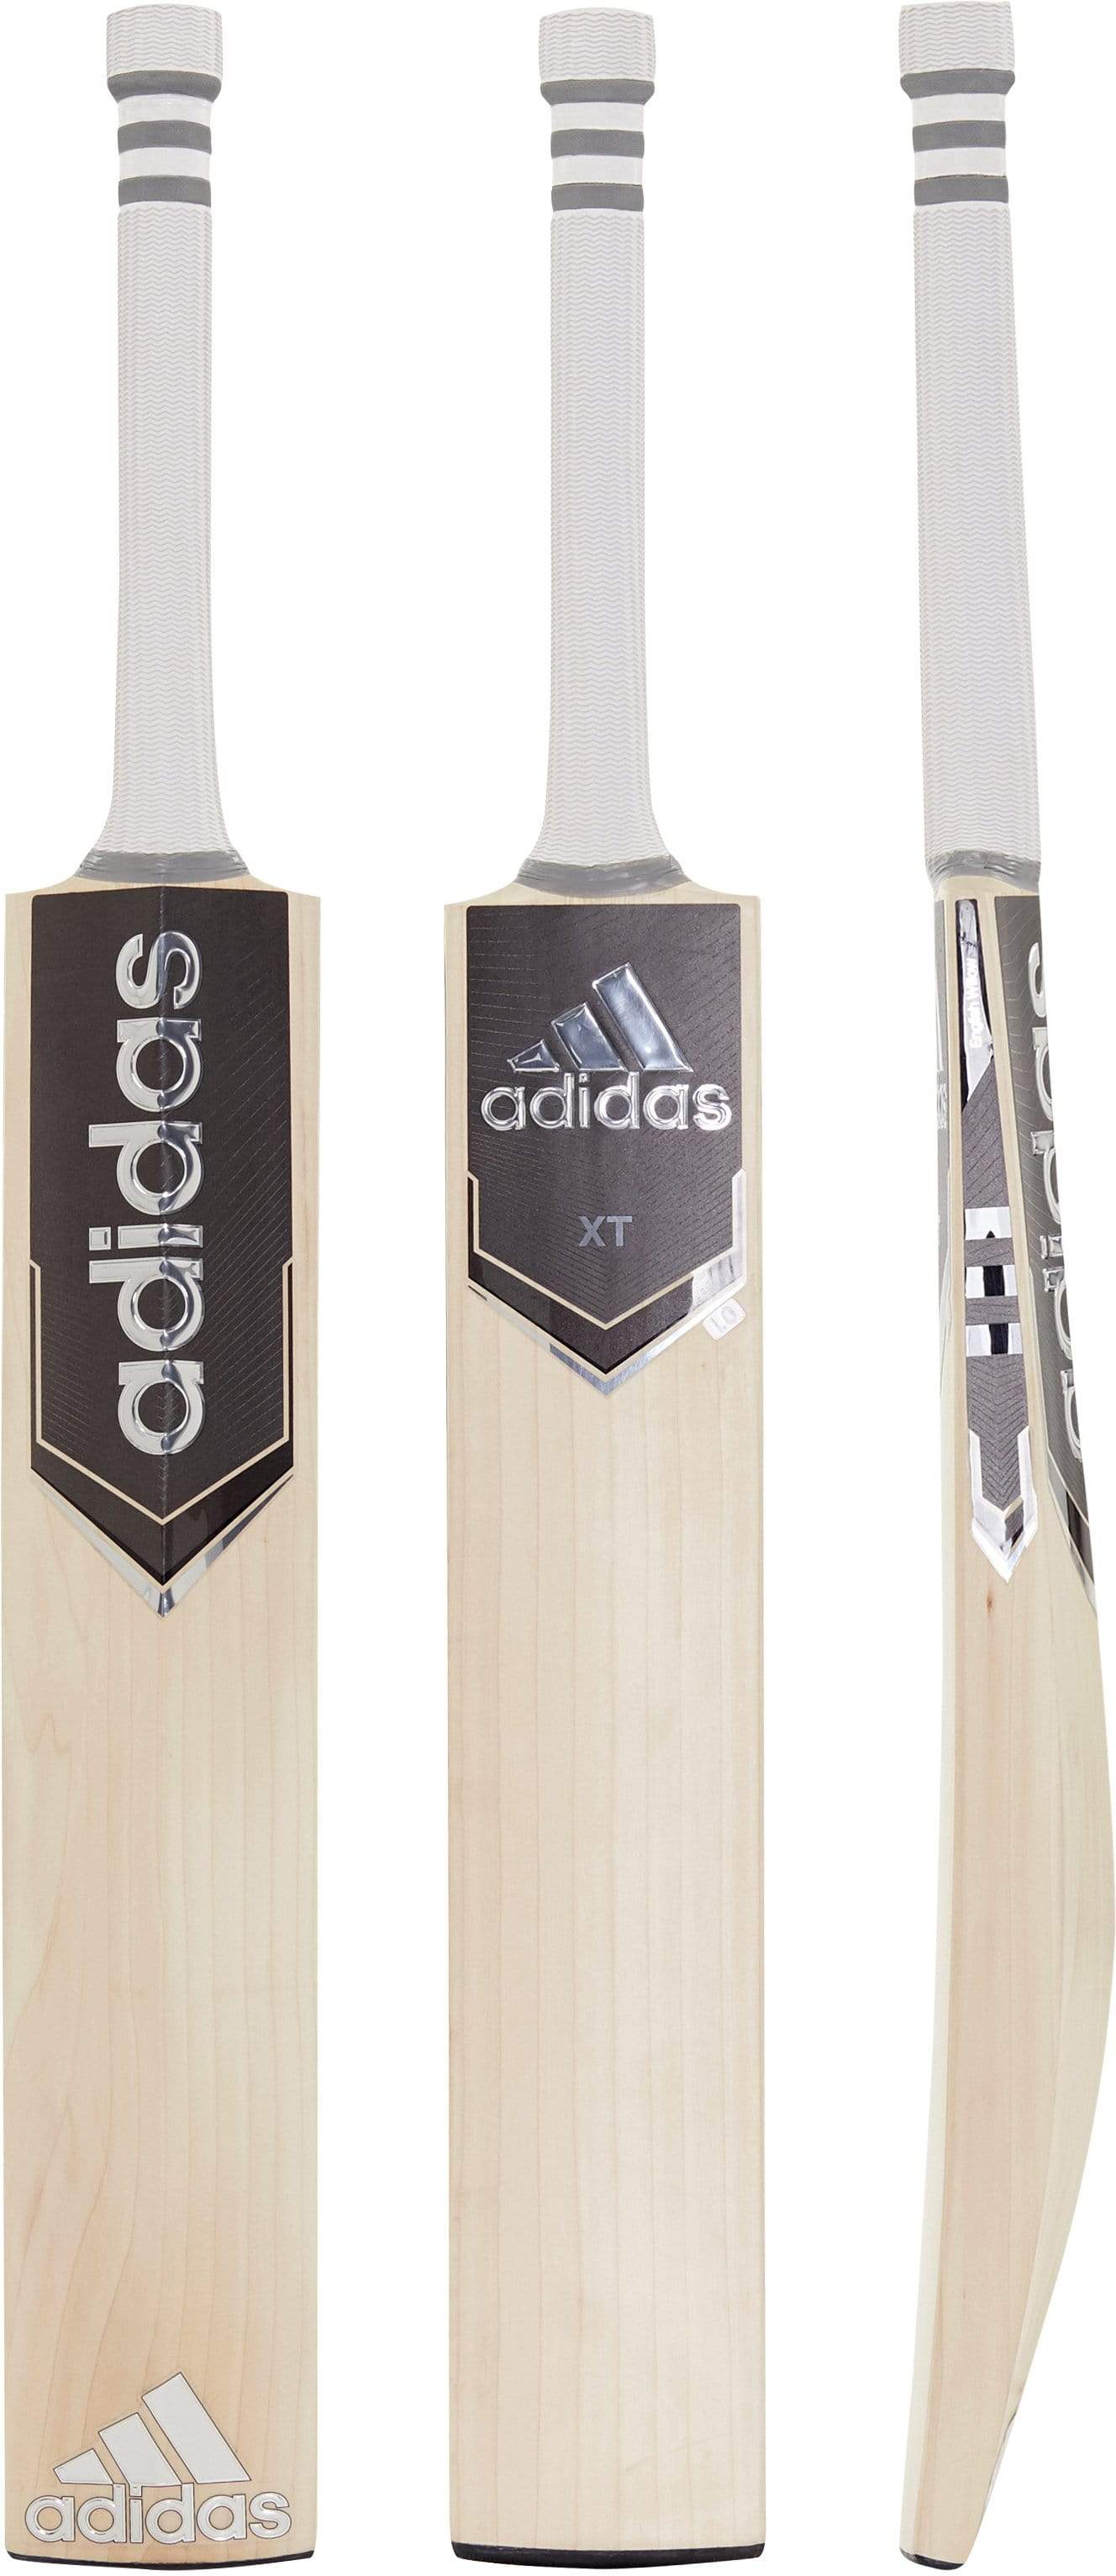 Adidas Cricket Bats SH / 2.7 Adidas Xt Grey 5.0 Senior Cricket Bat